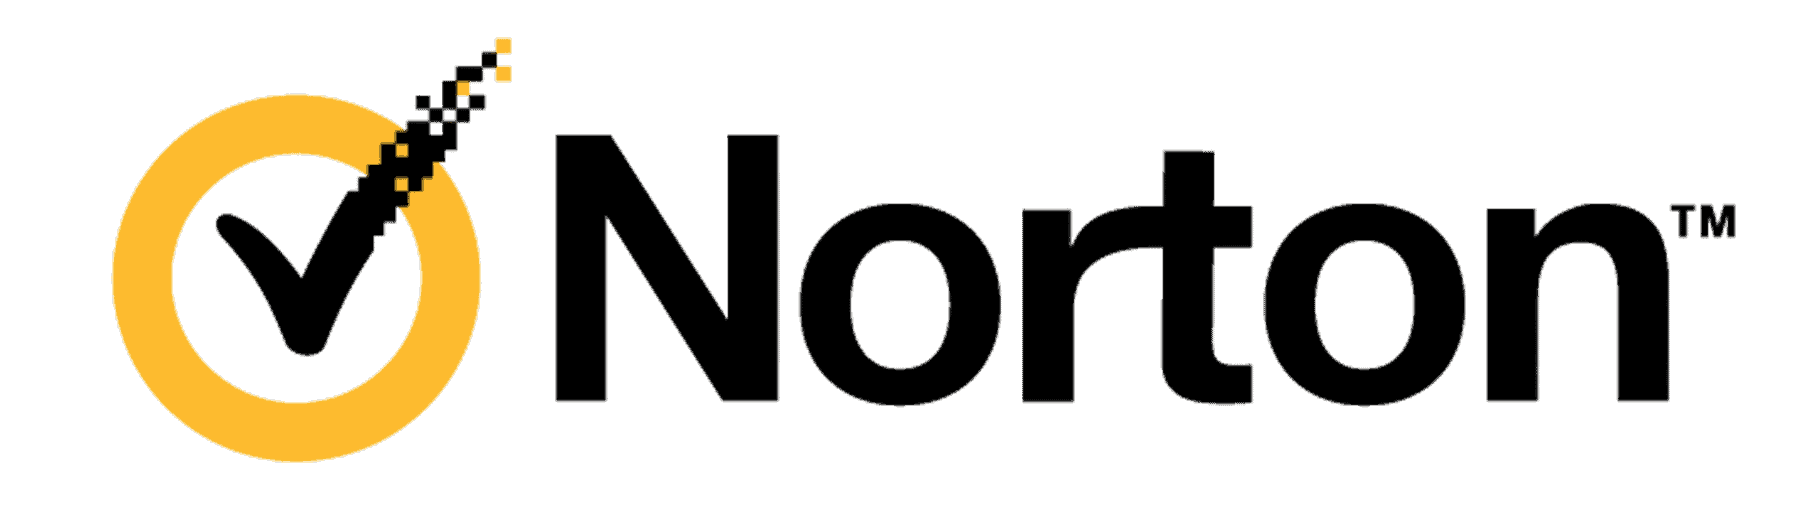 Norton Antivirus - Product Logo